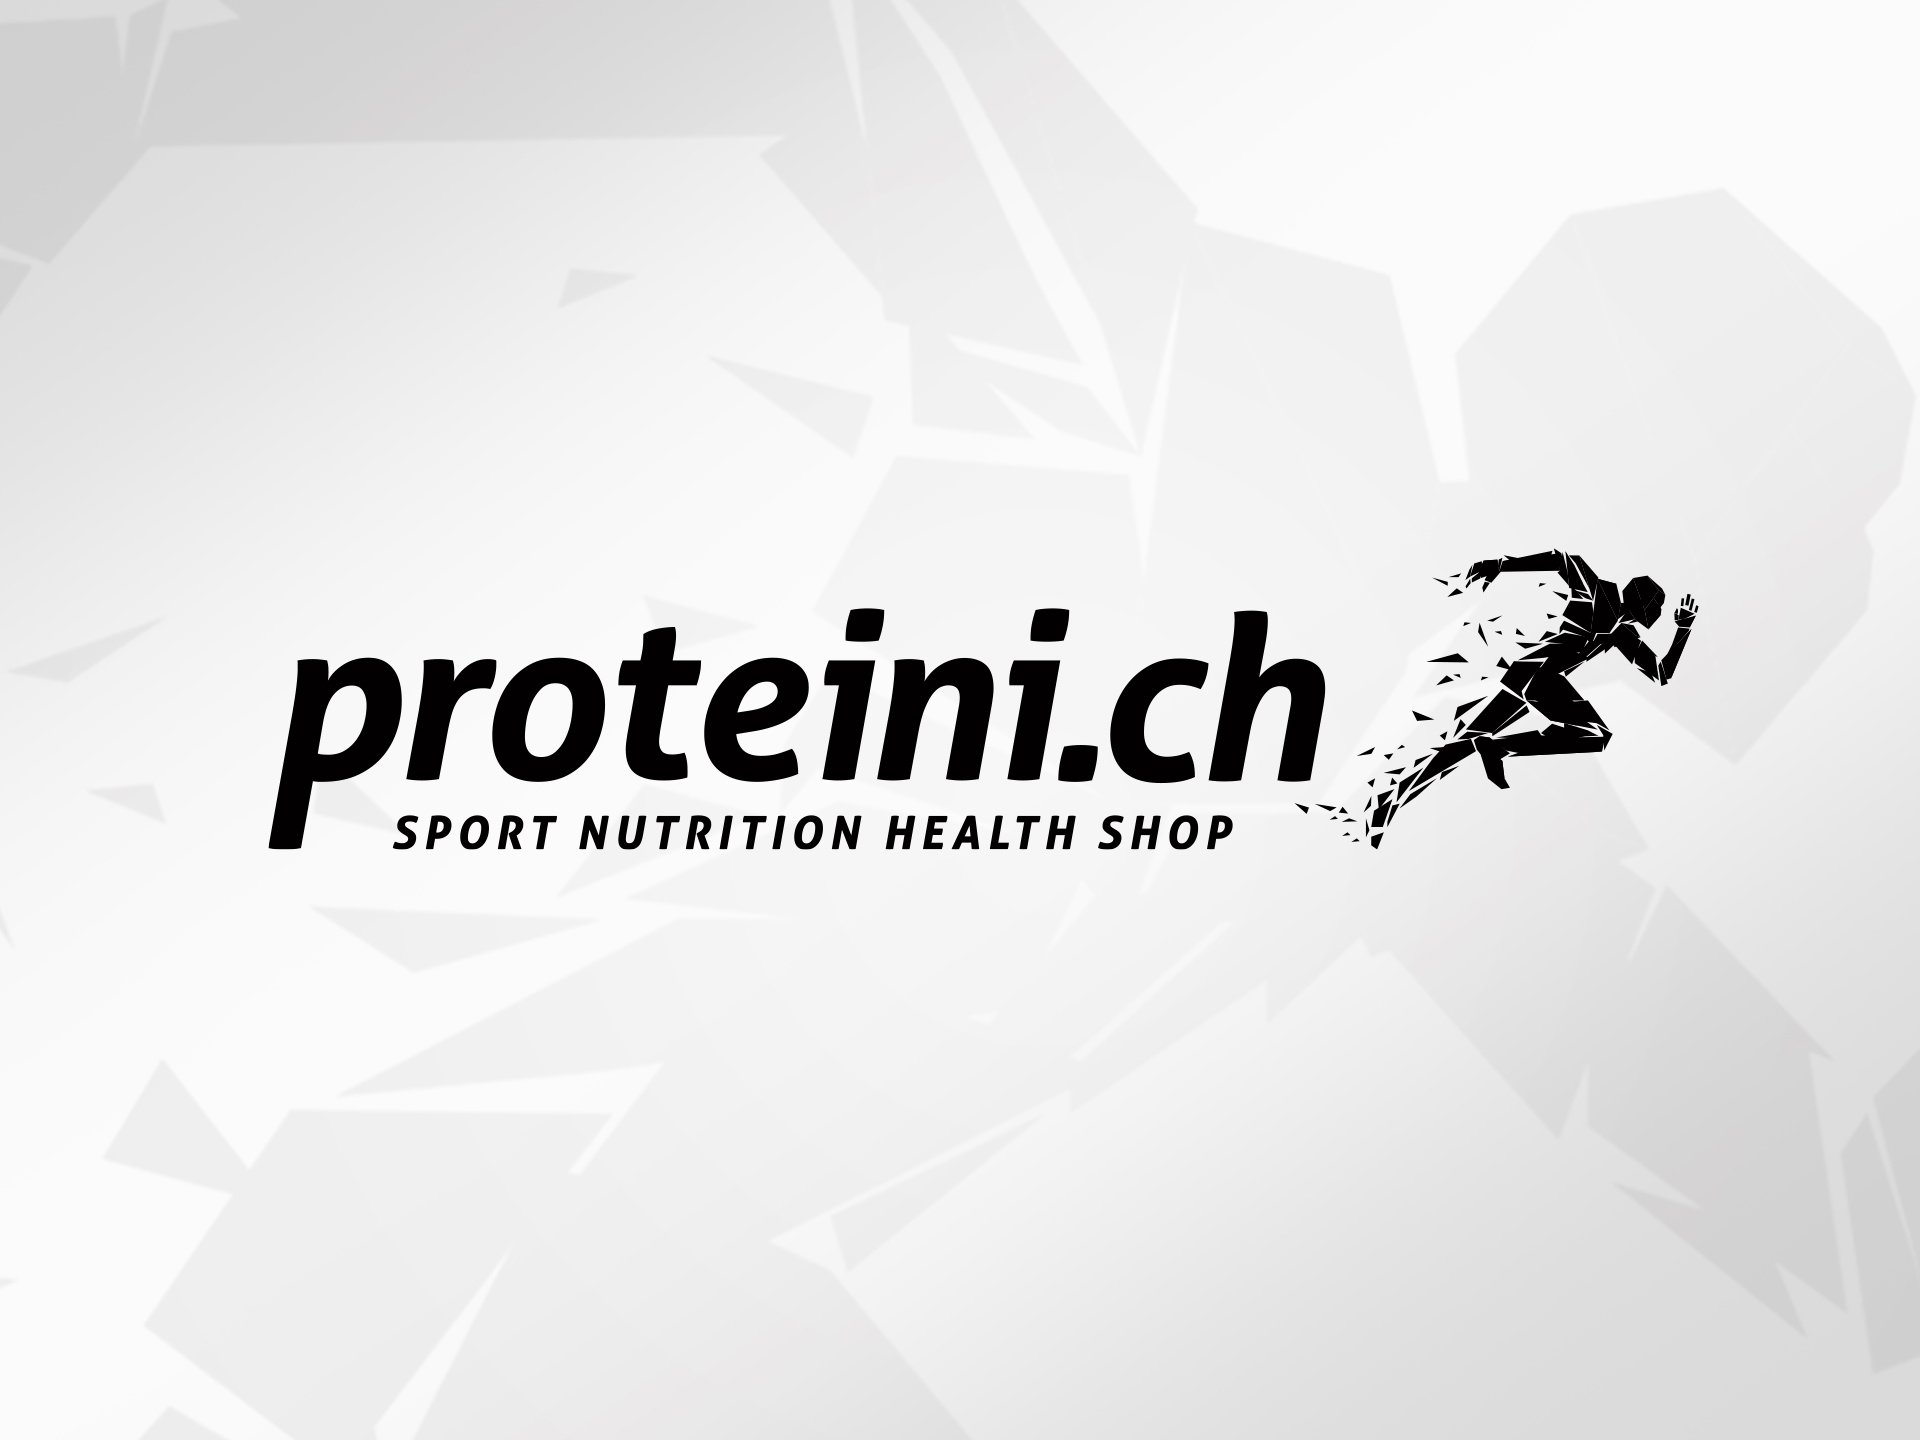 Proteini.ch Sport Nutrition Health Shop